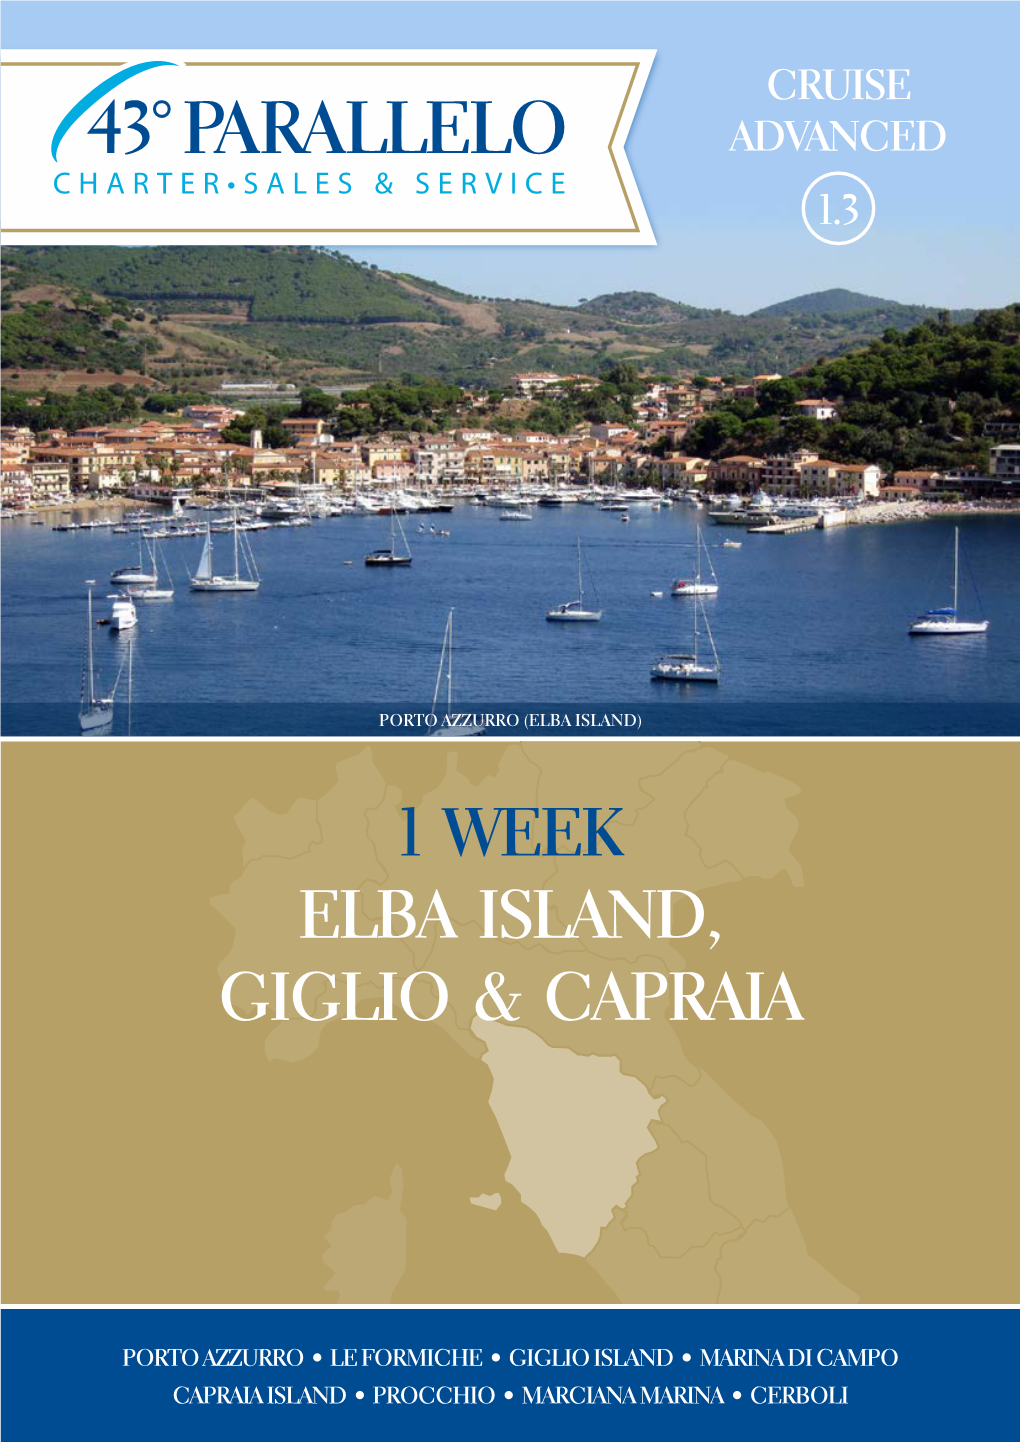 1 Week Elba Island, Giglio & Capraia